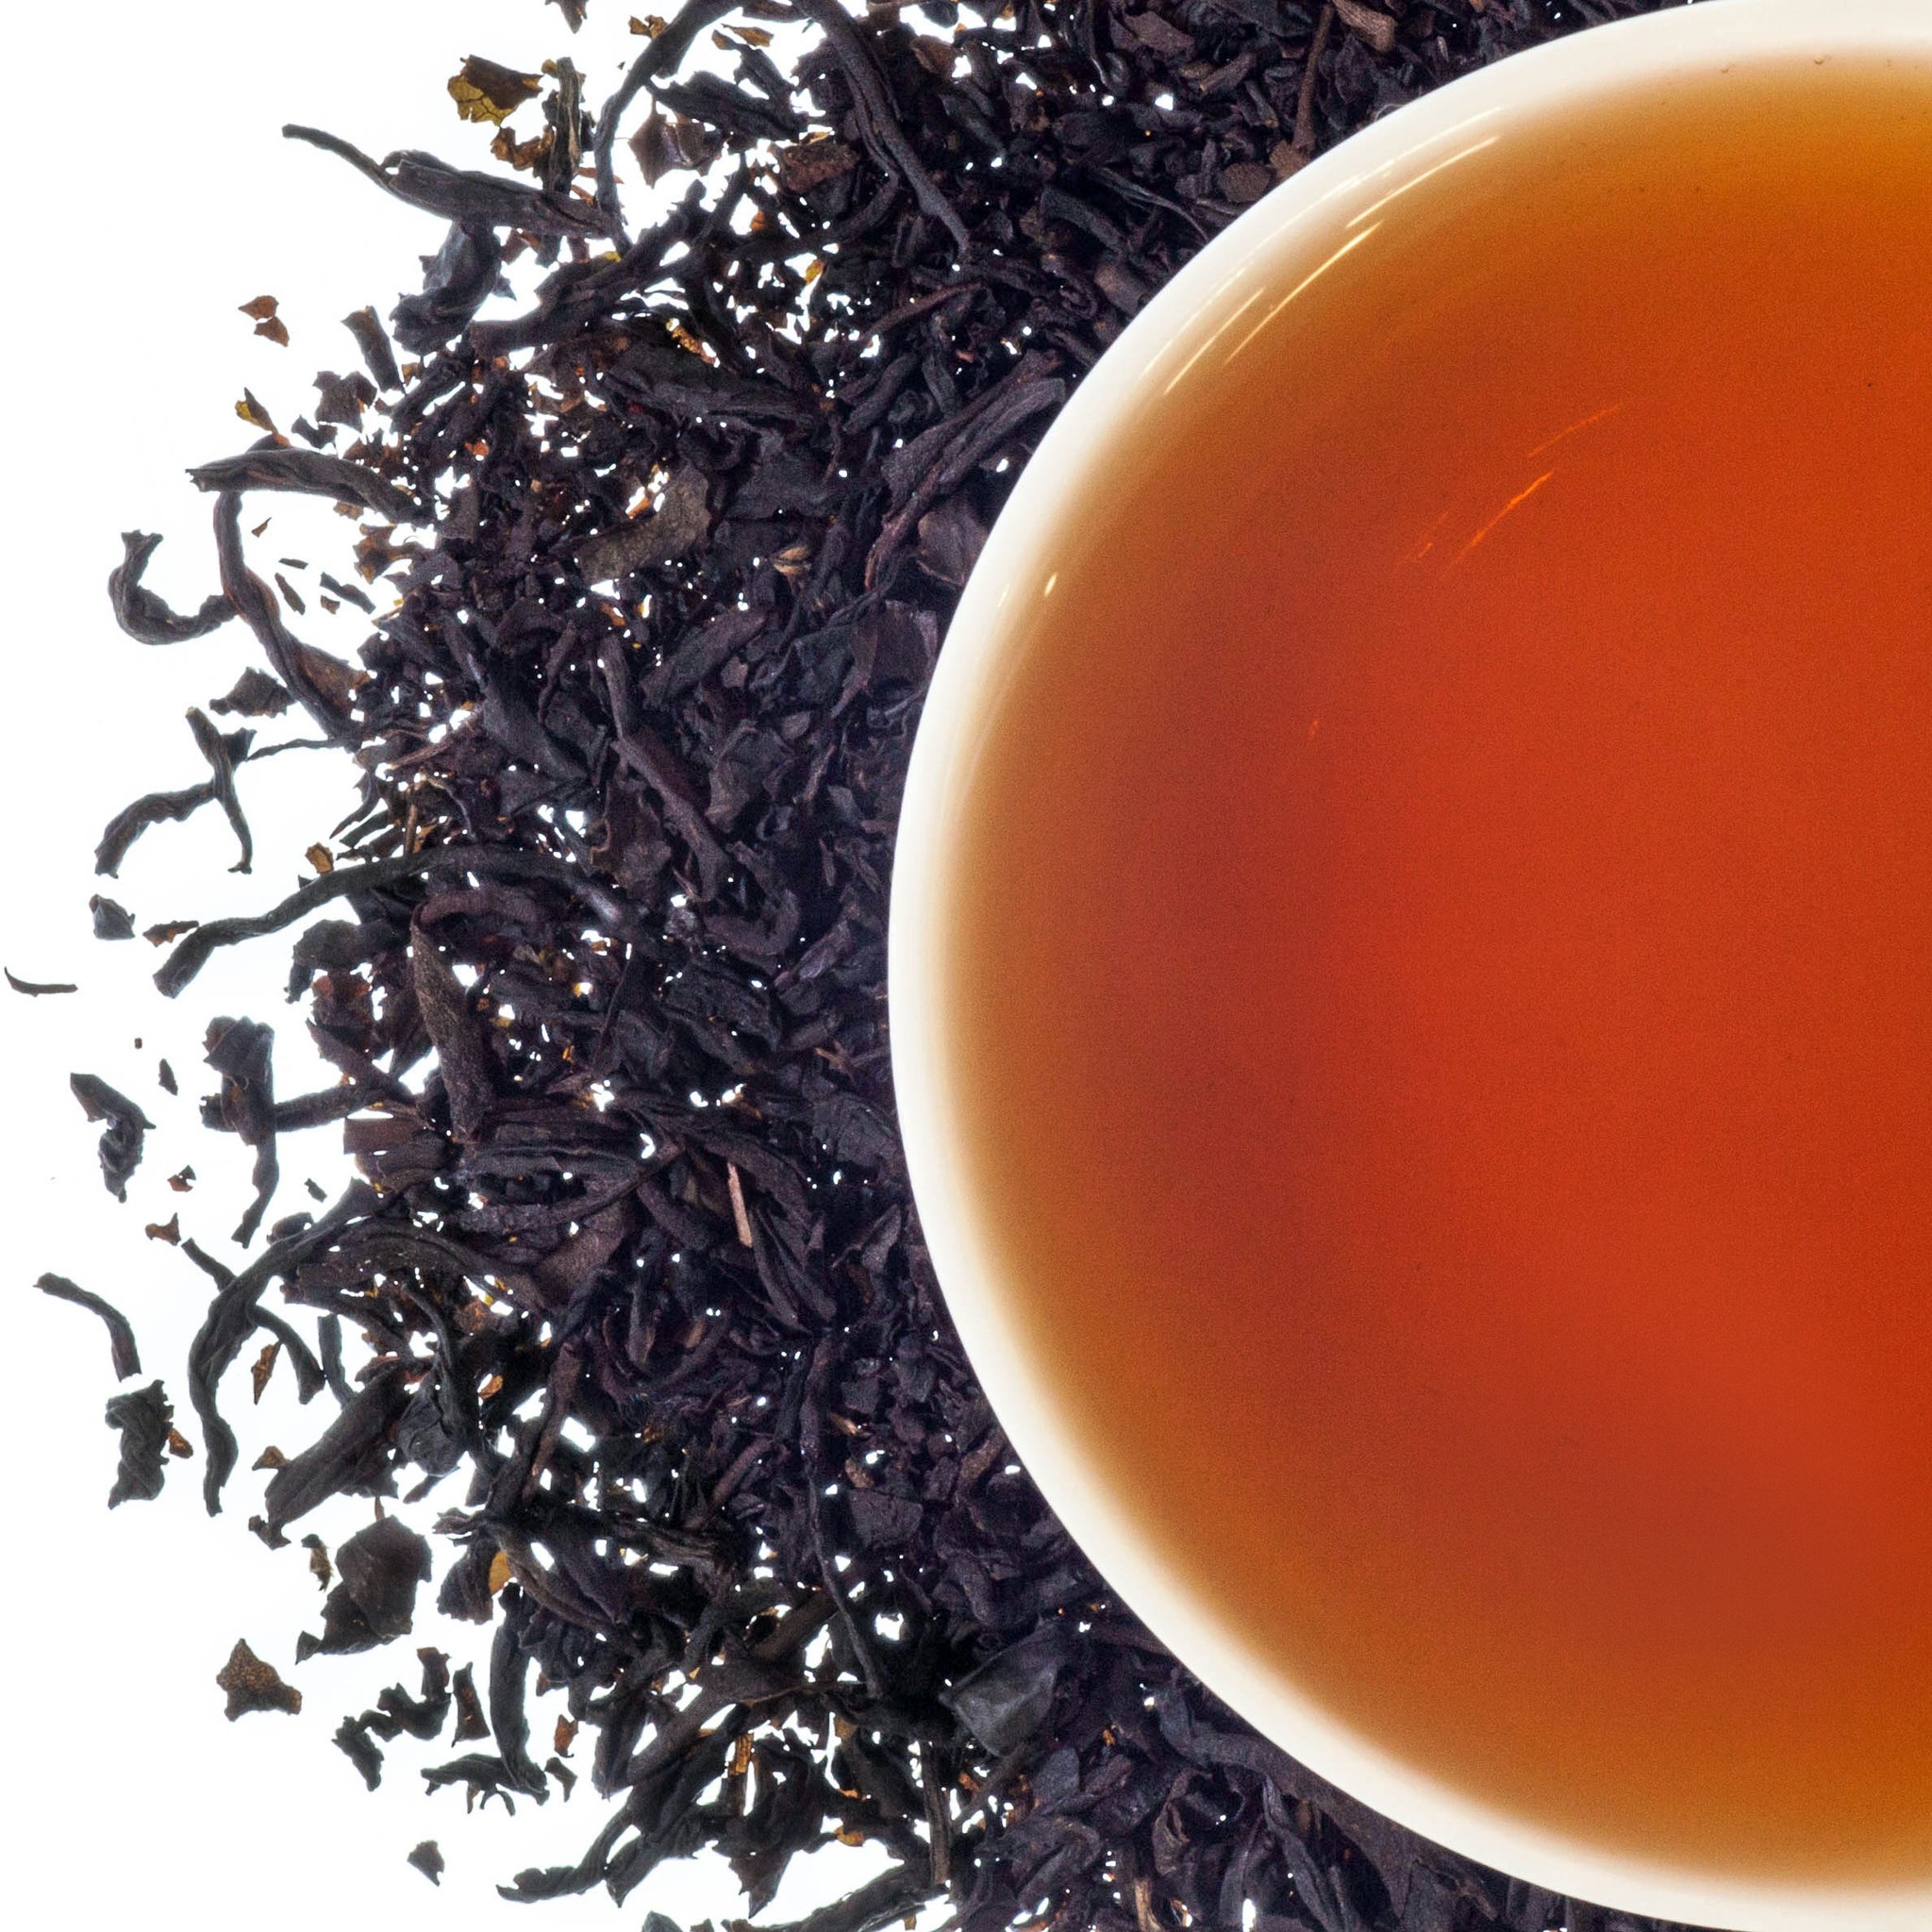 schwarzer tee gesunde ernährung toller geschmack